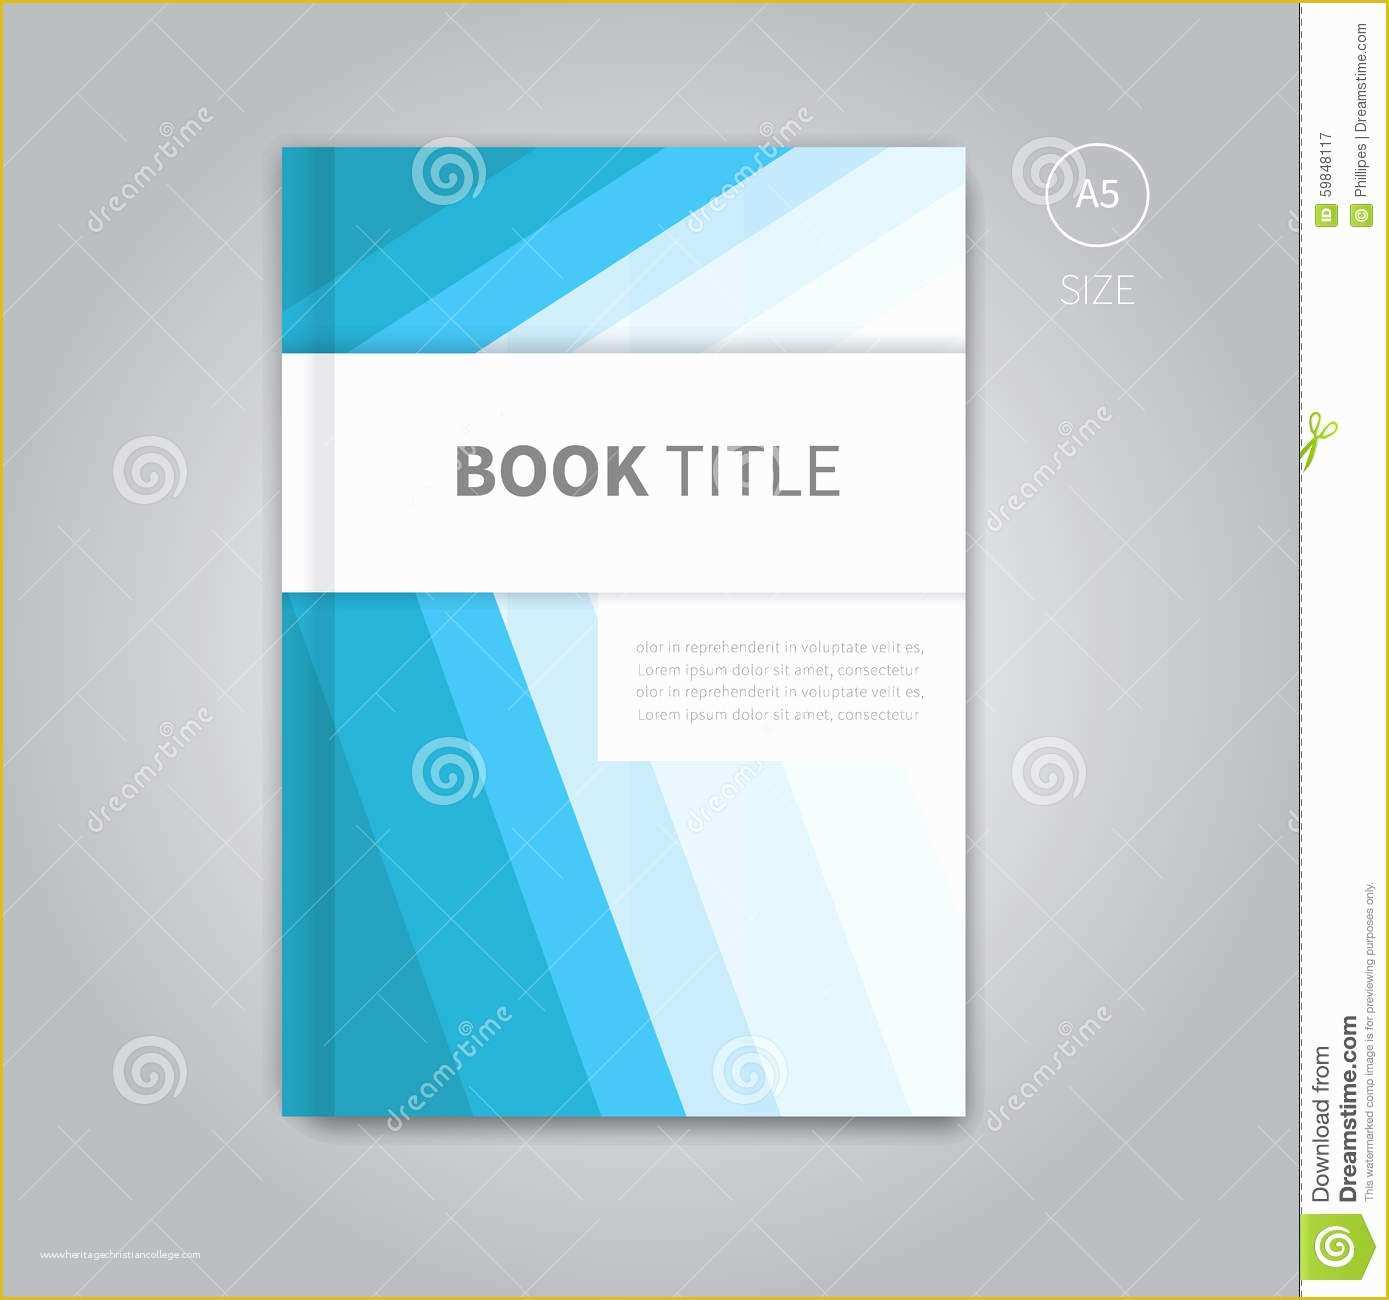 Free Book Cover Templates Of Vector Book Cover Template Design Stock Vector